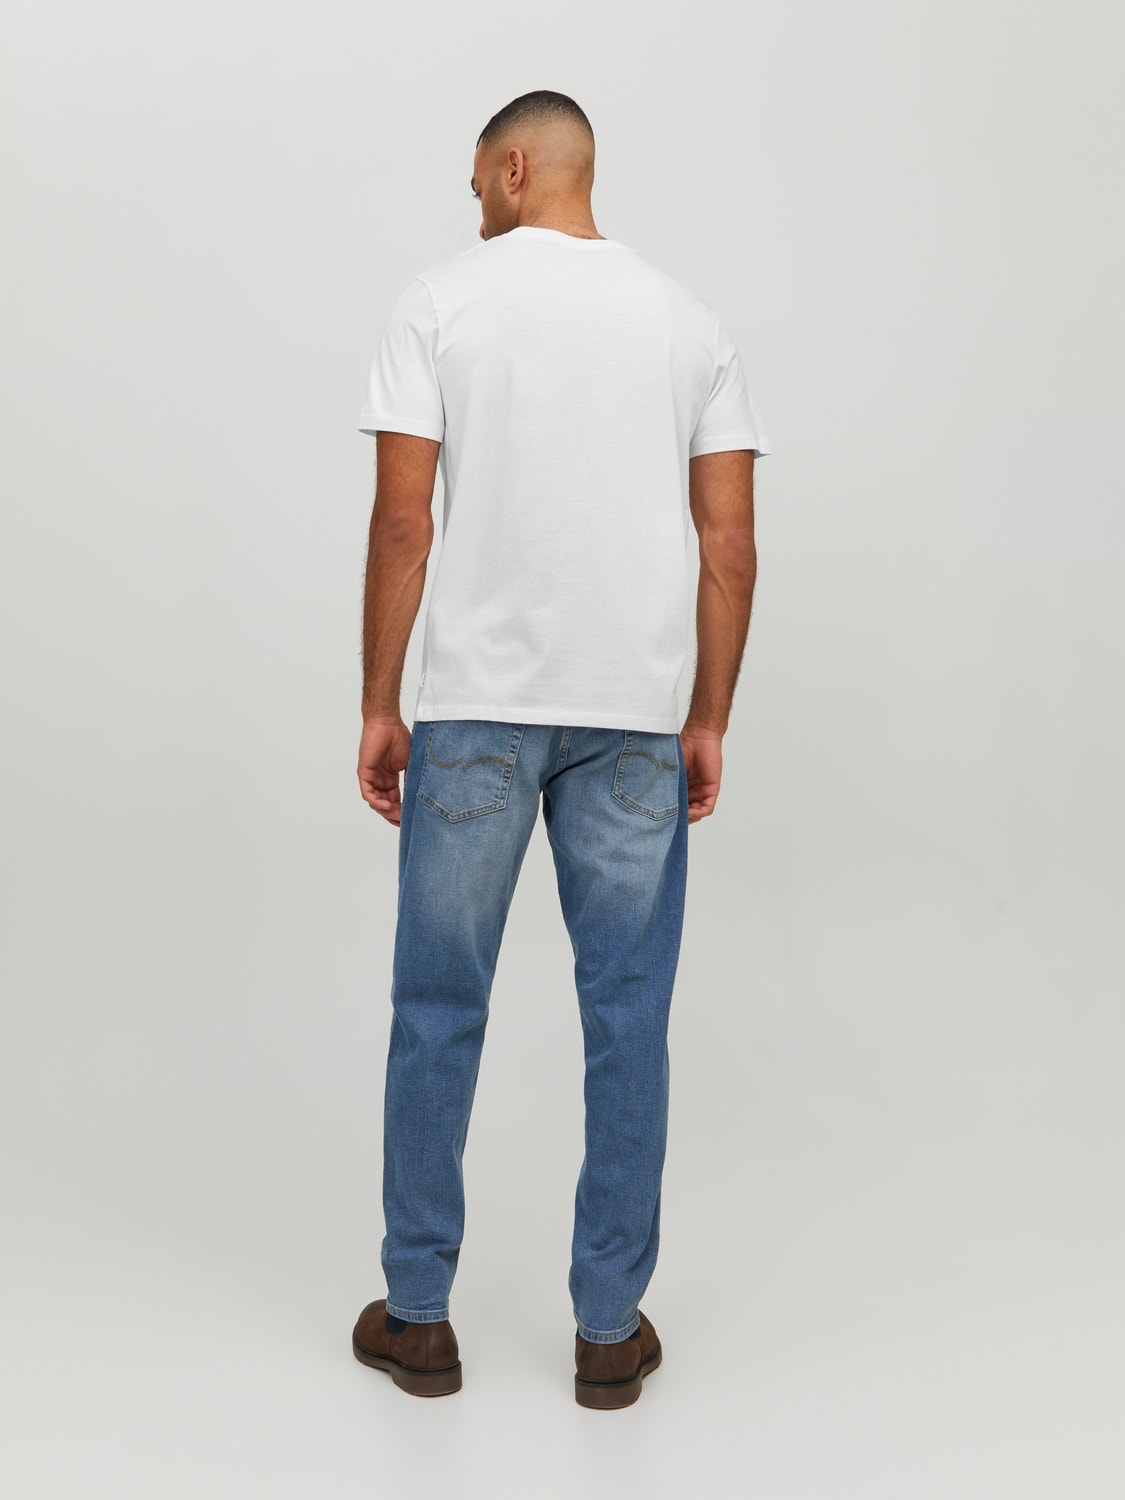 Jack & Jones Camiseta Liso Cuello en V -White - 12156102